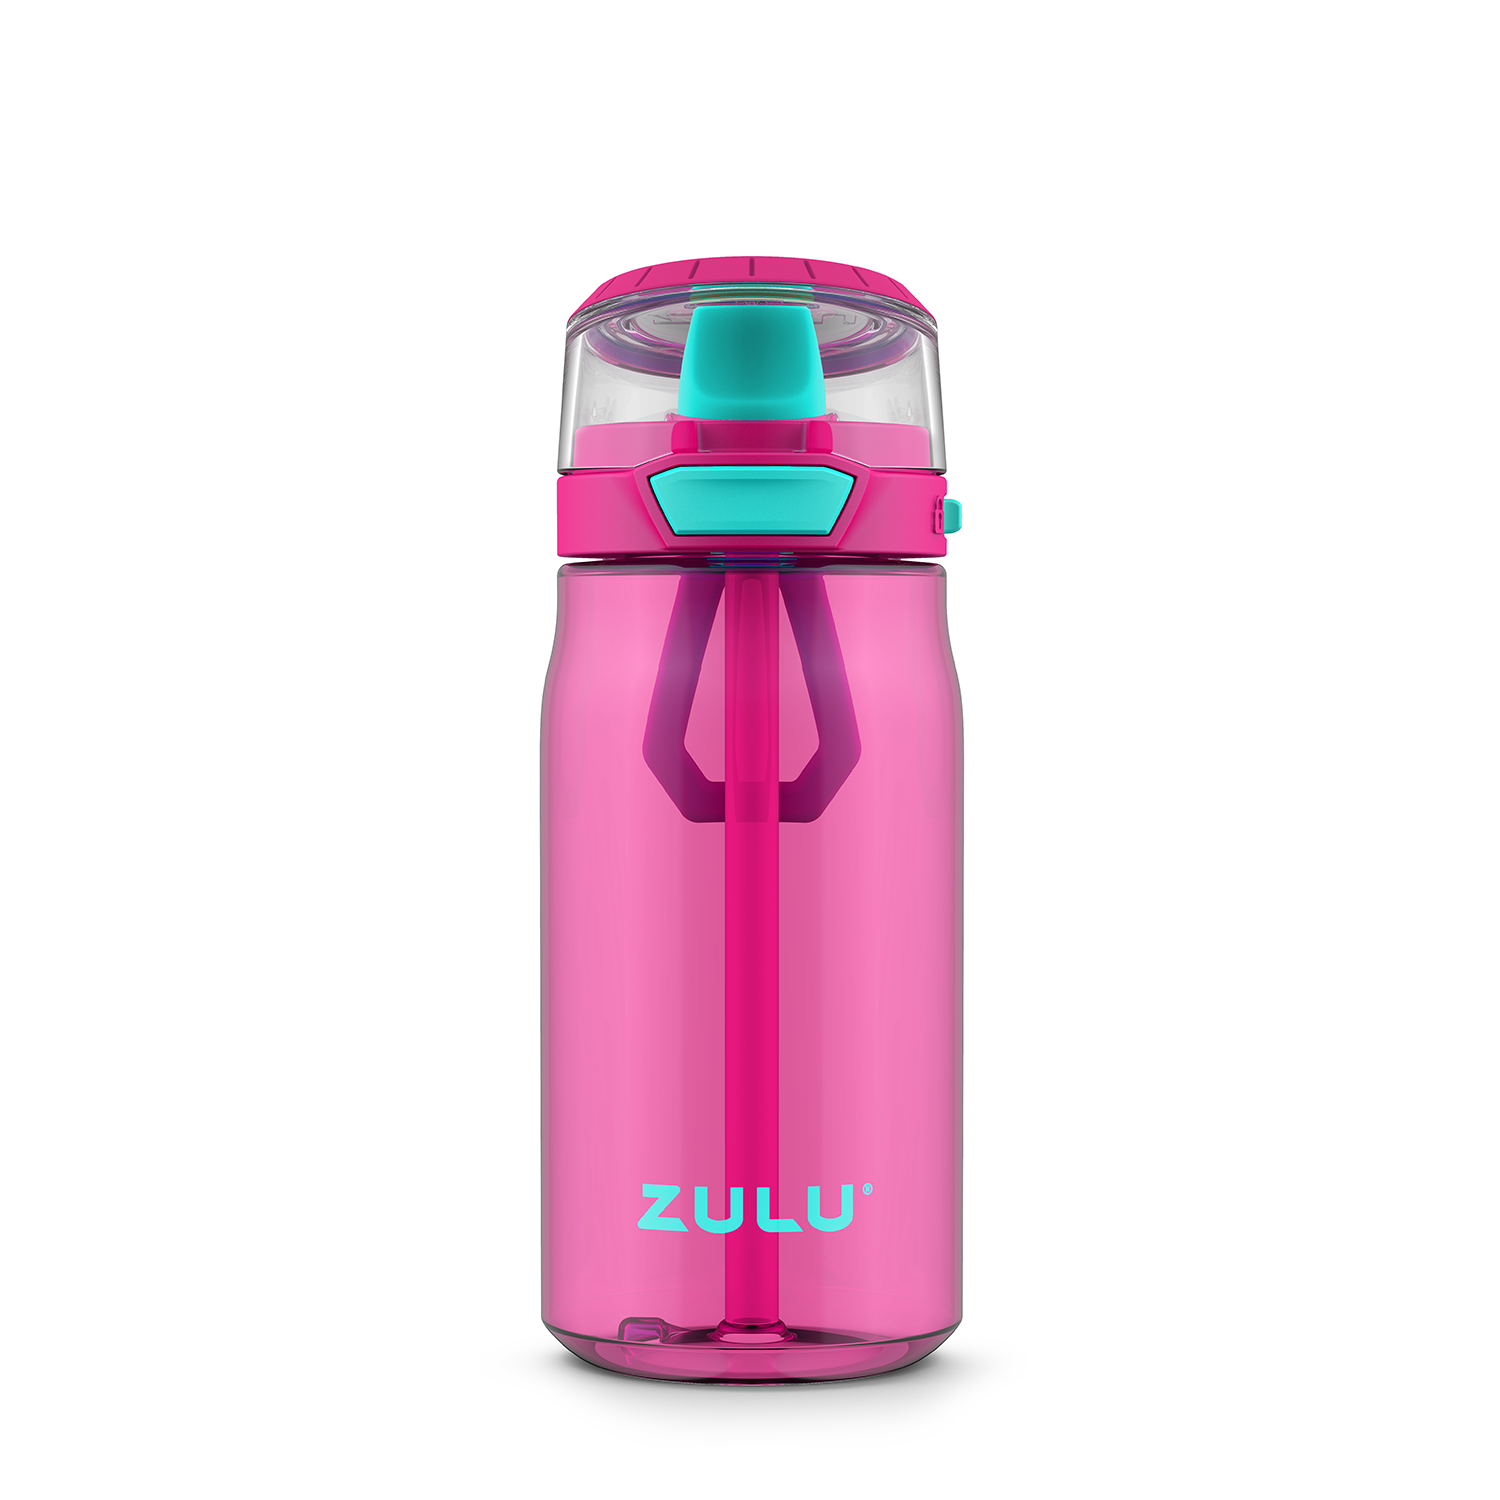 ZULU Torque Water Bottle 16 Oz Blue - Office Depot